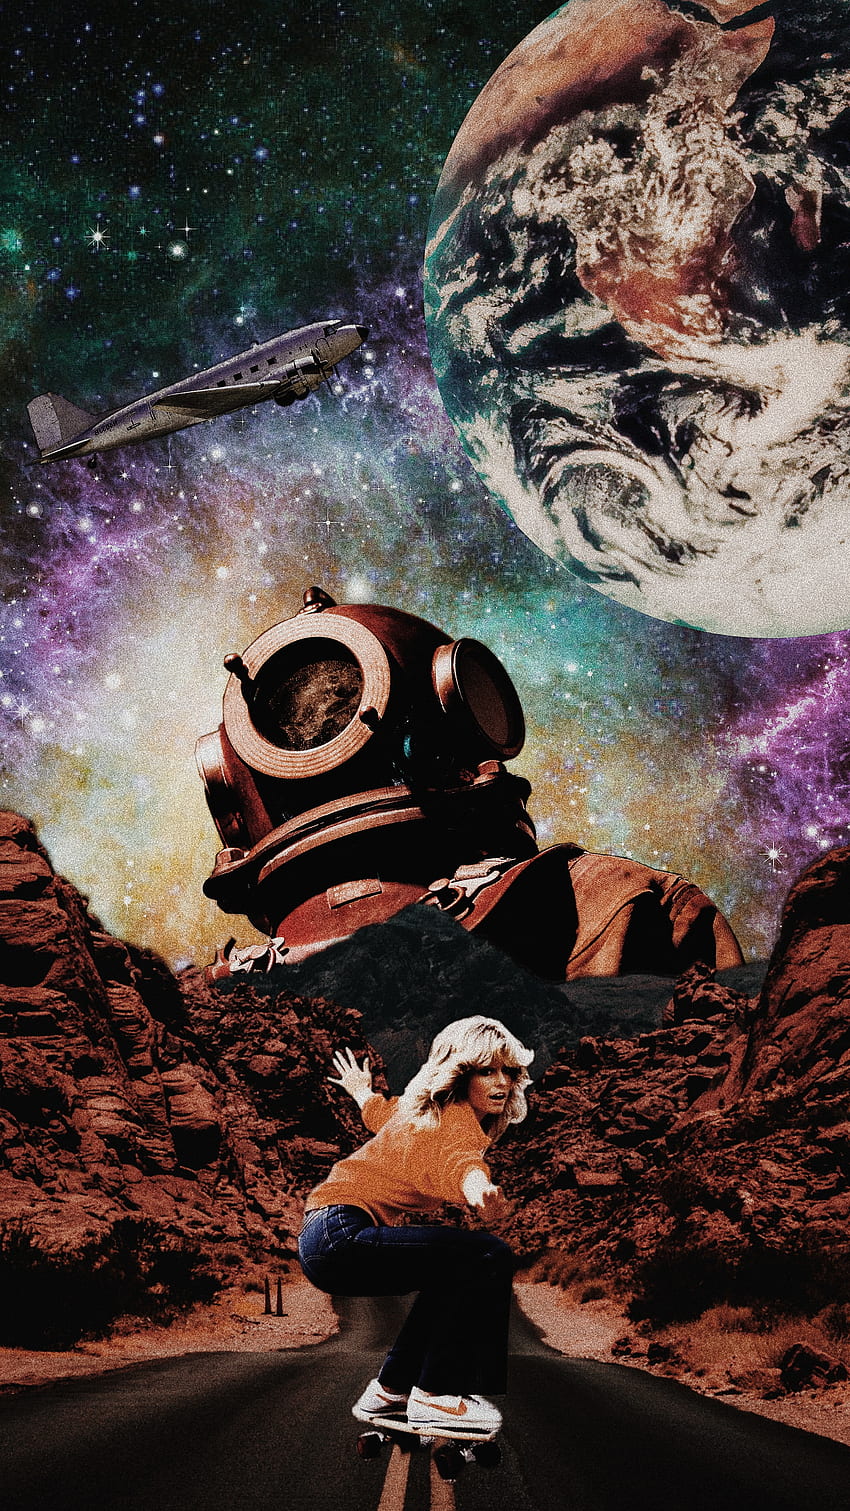 Der Wachsame, Espacio, Astronaut, Surrealismus, Kunst, Surrealismus, Sterne, Universum, Universum, Weltraum HD-Handy-Hintergrundbild